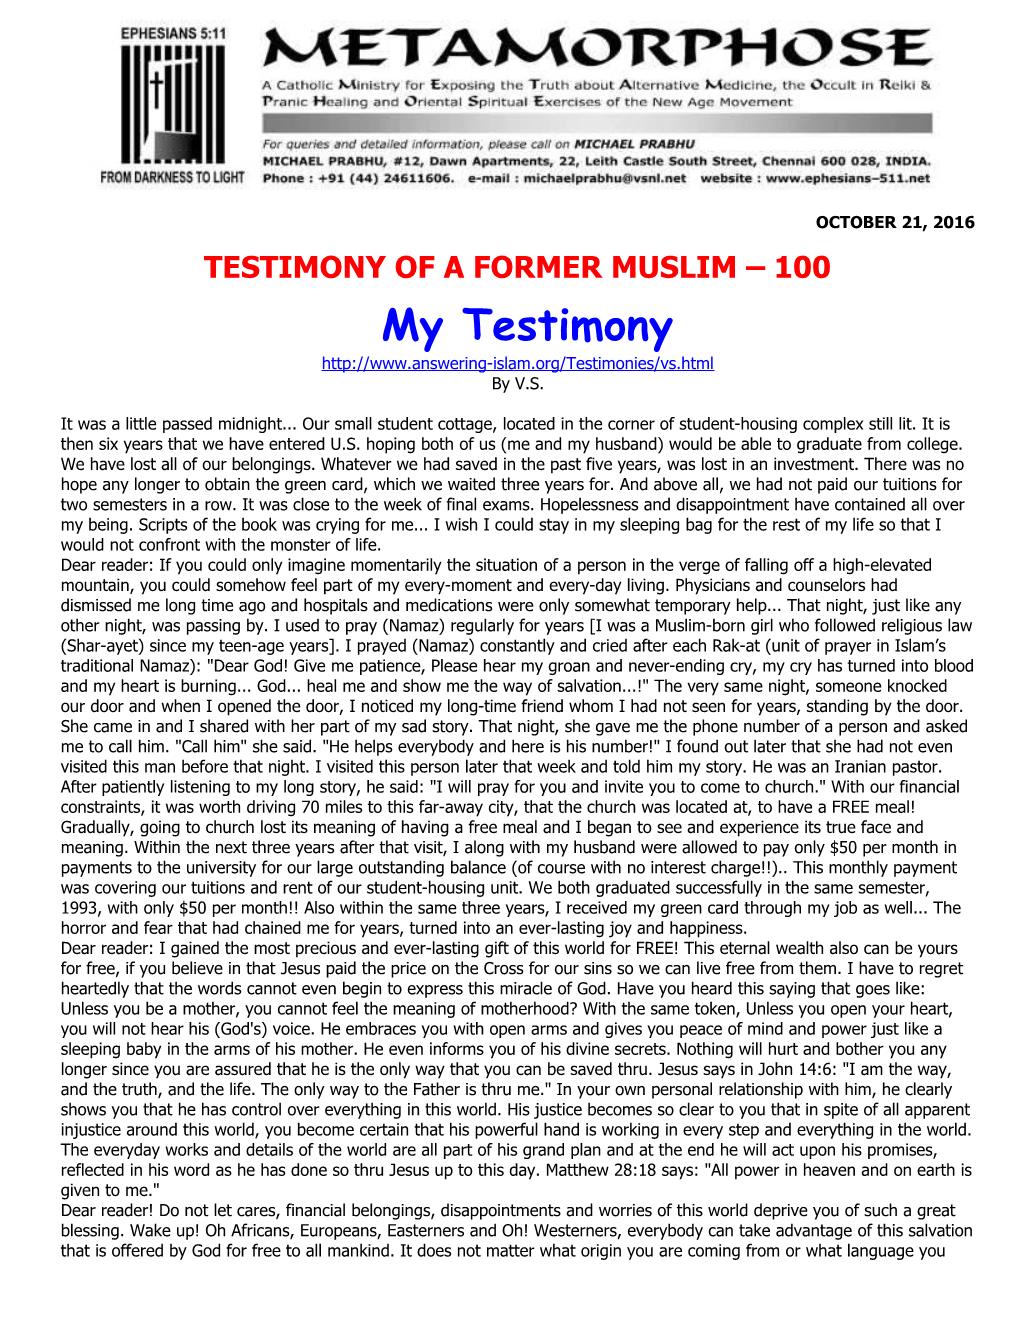 Testimony of a Former Muslim 100